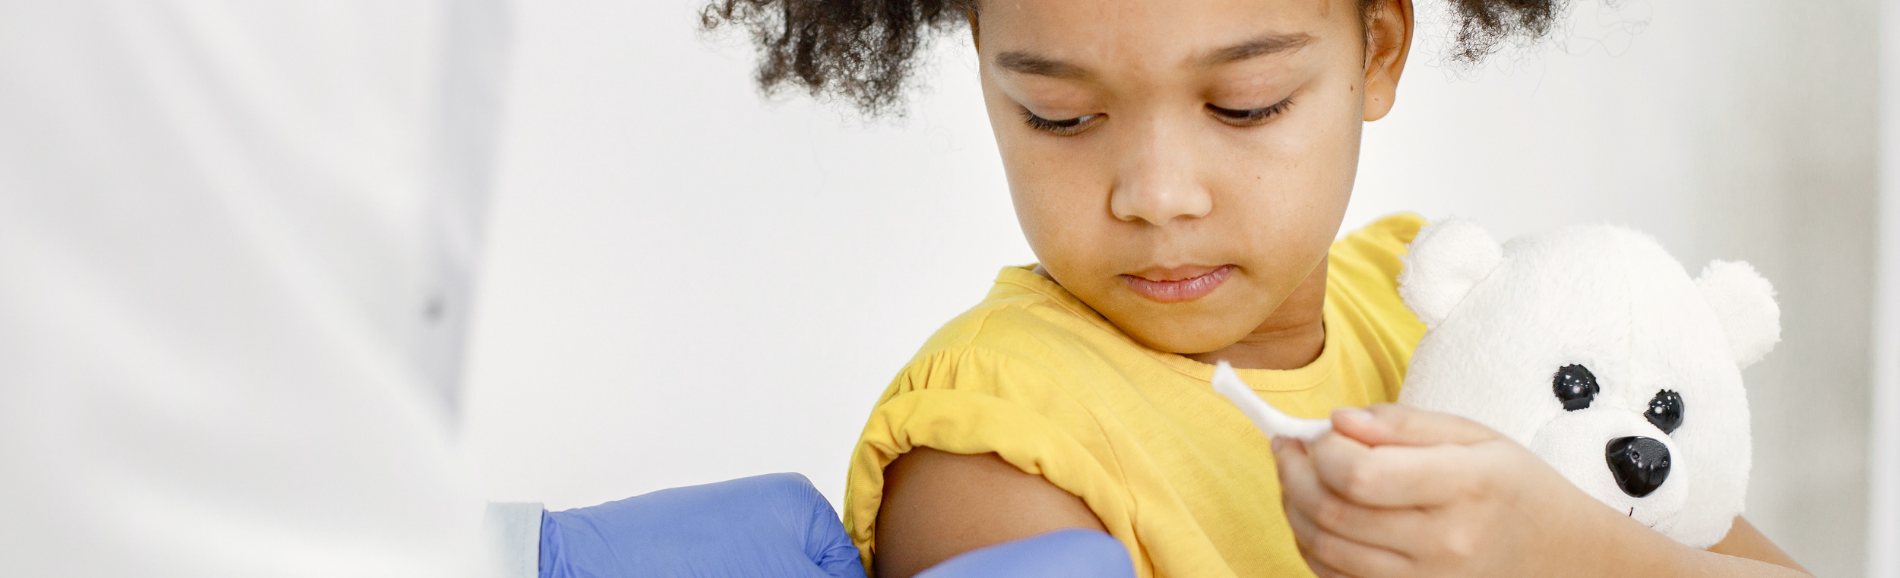 Little girl, holding teddy bear, getting an immunization.